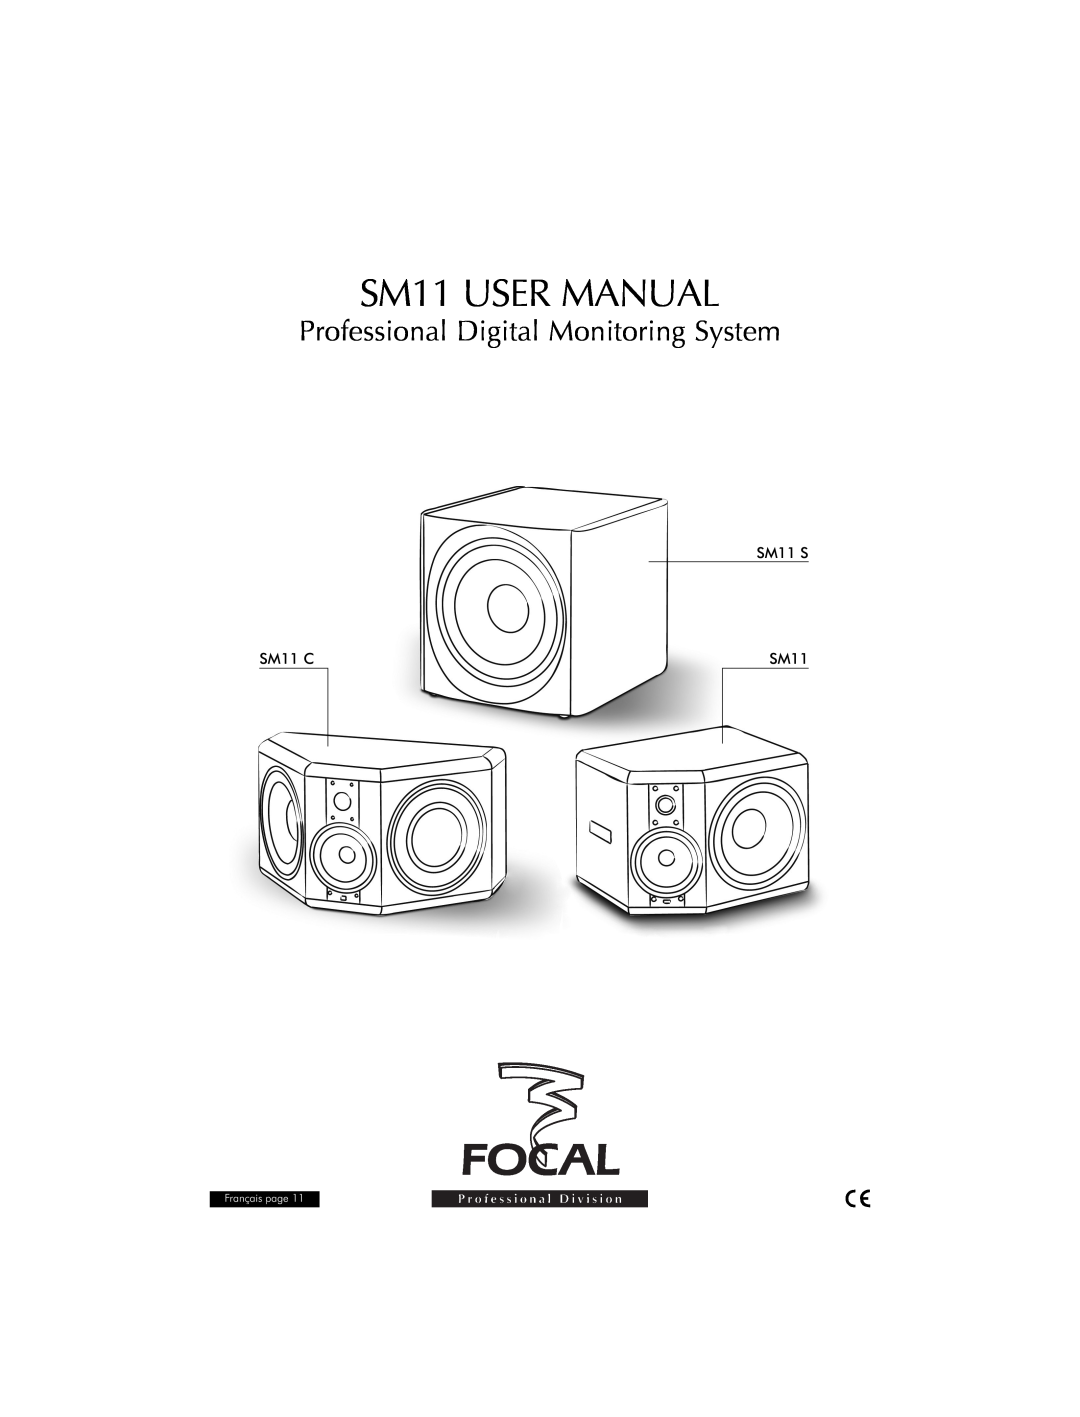 Focal user manual SM11 S, SM11 C, Professional Digital Monitoring System, Français page 